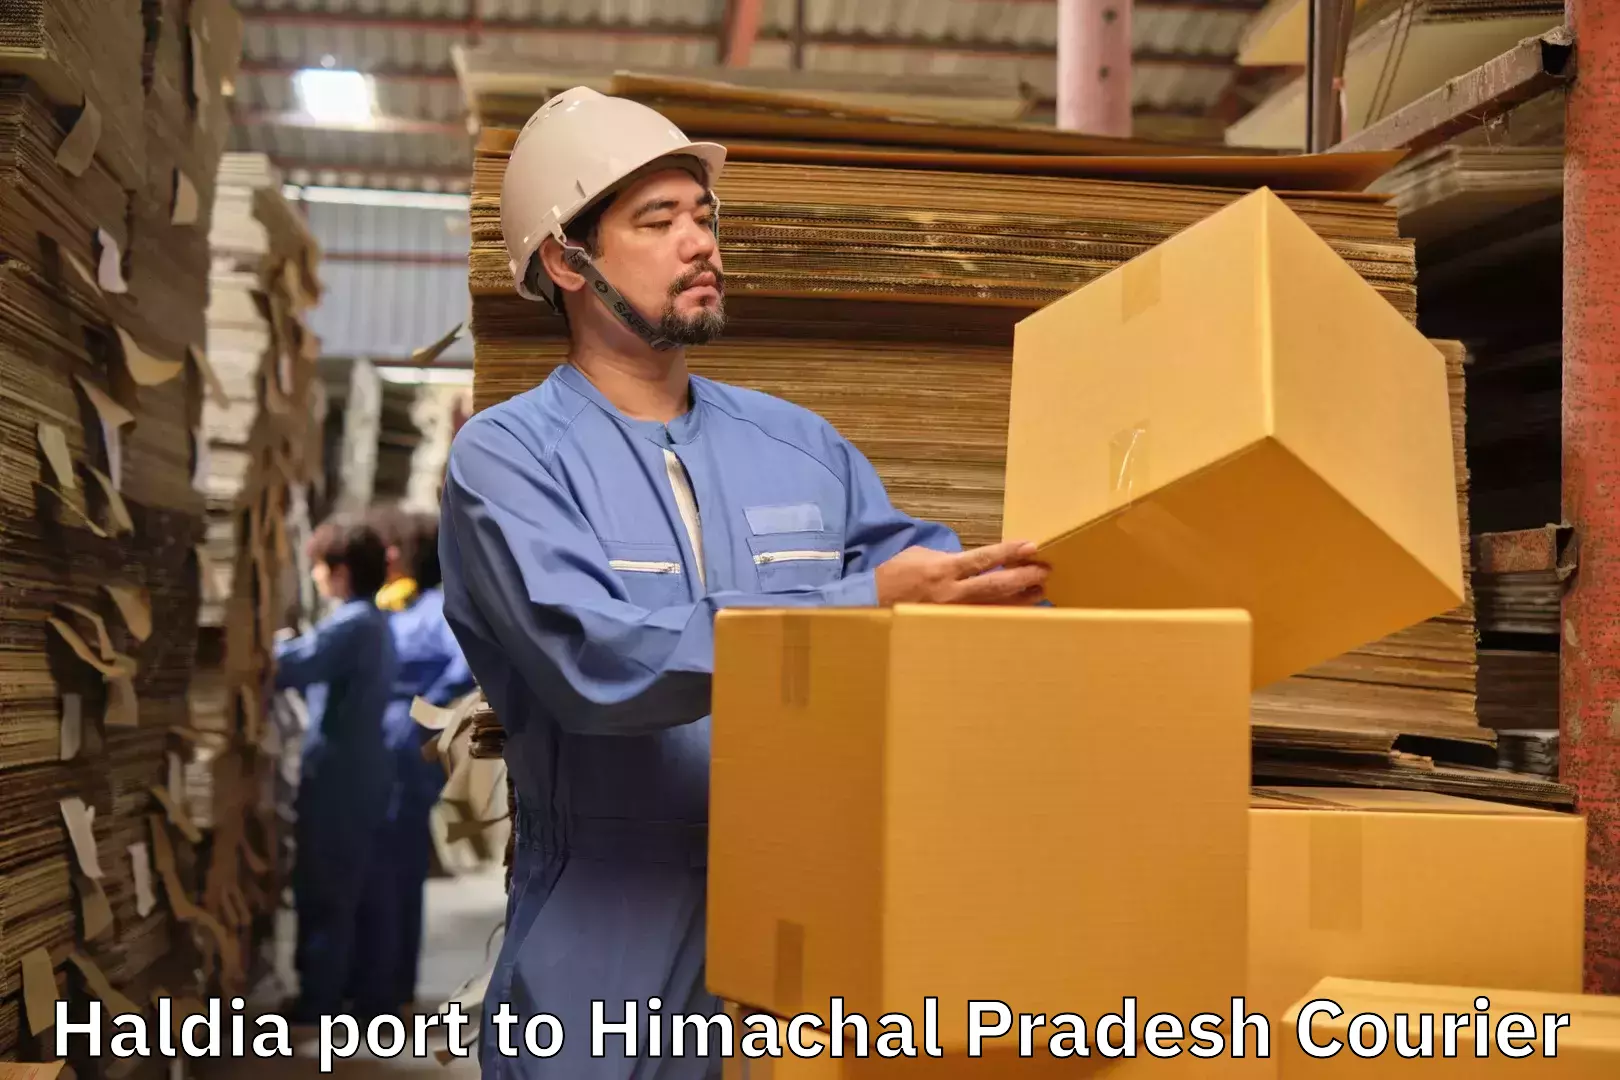 Luggage shipment tracking Haldia port to Himachal Pradesh